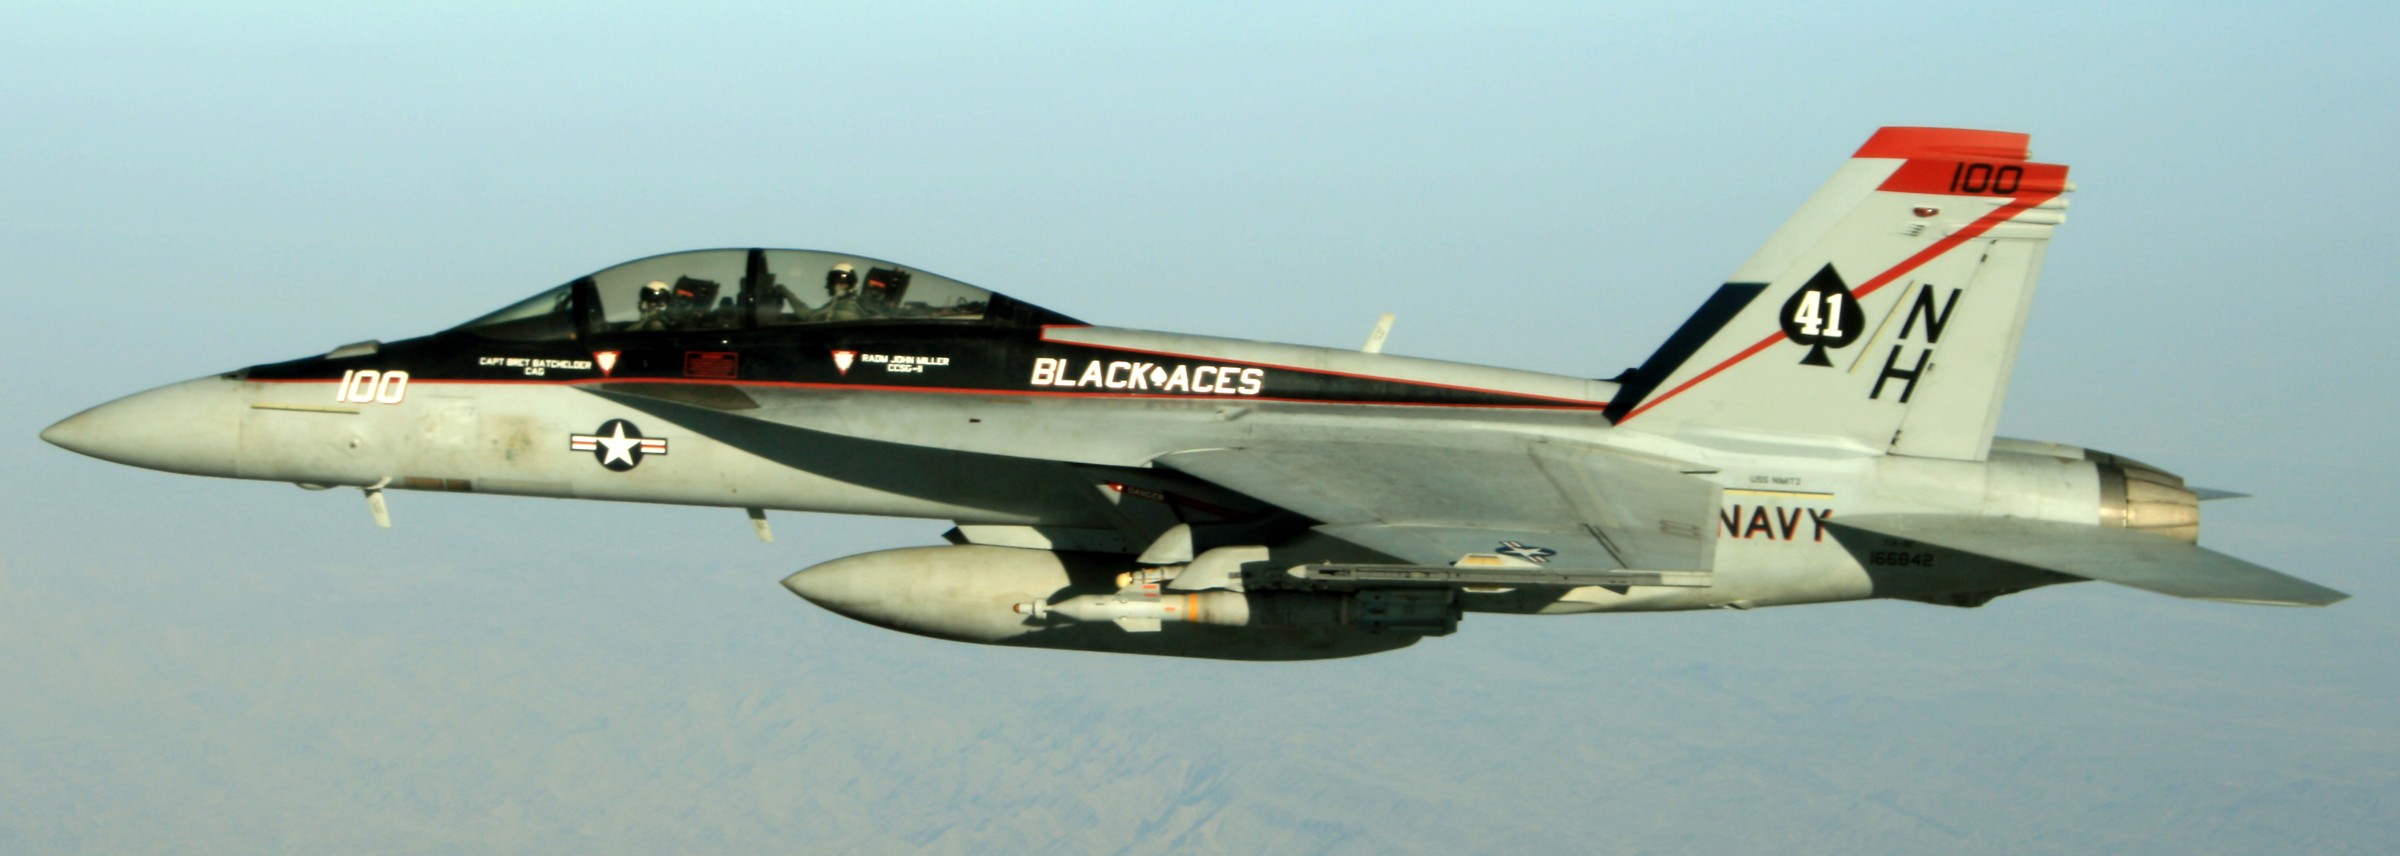 vfa-41 black aces strike fighter squadron f/a-18f super hornet cvw-11 cvn-68 uss nimitz us navy 125p